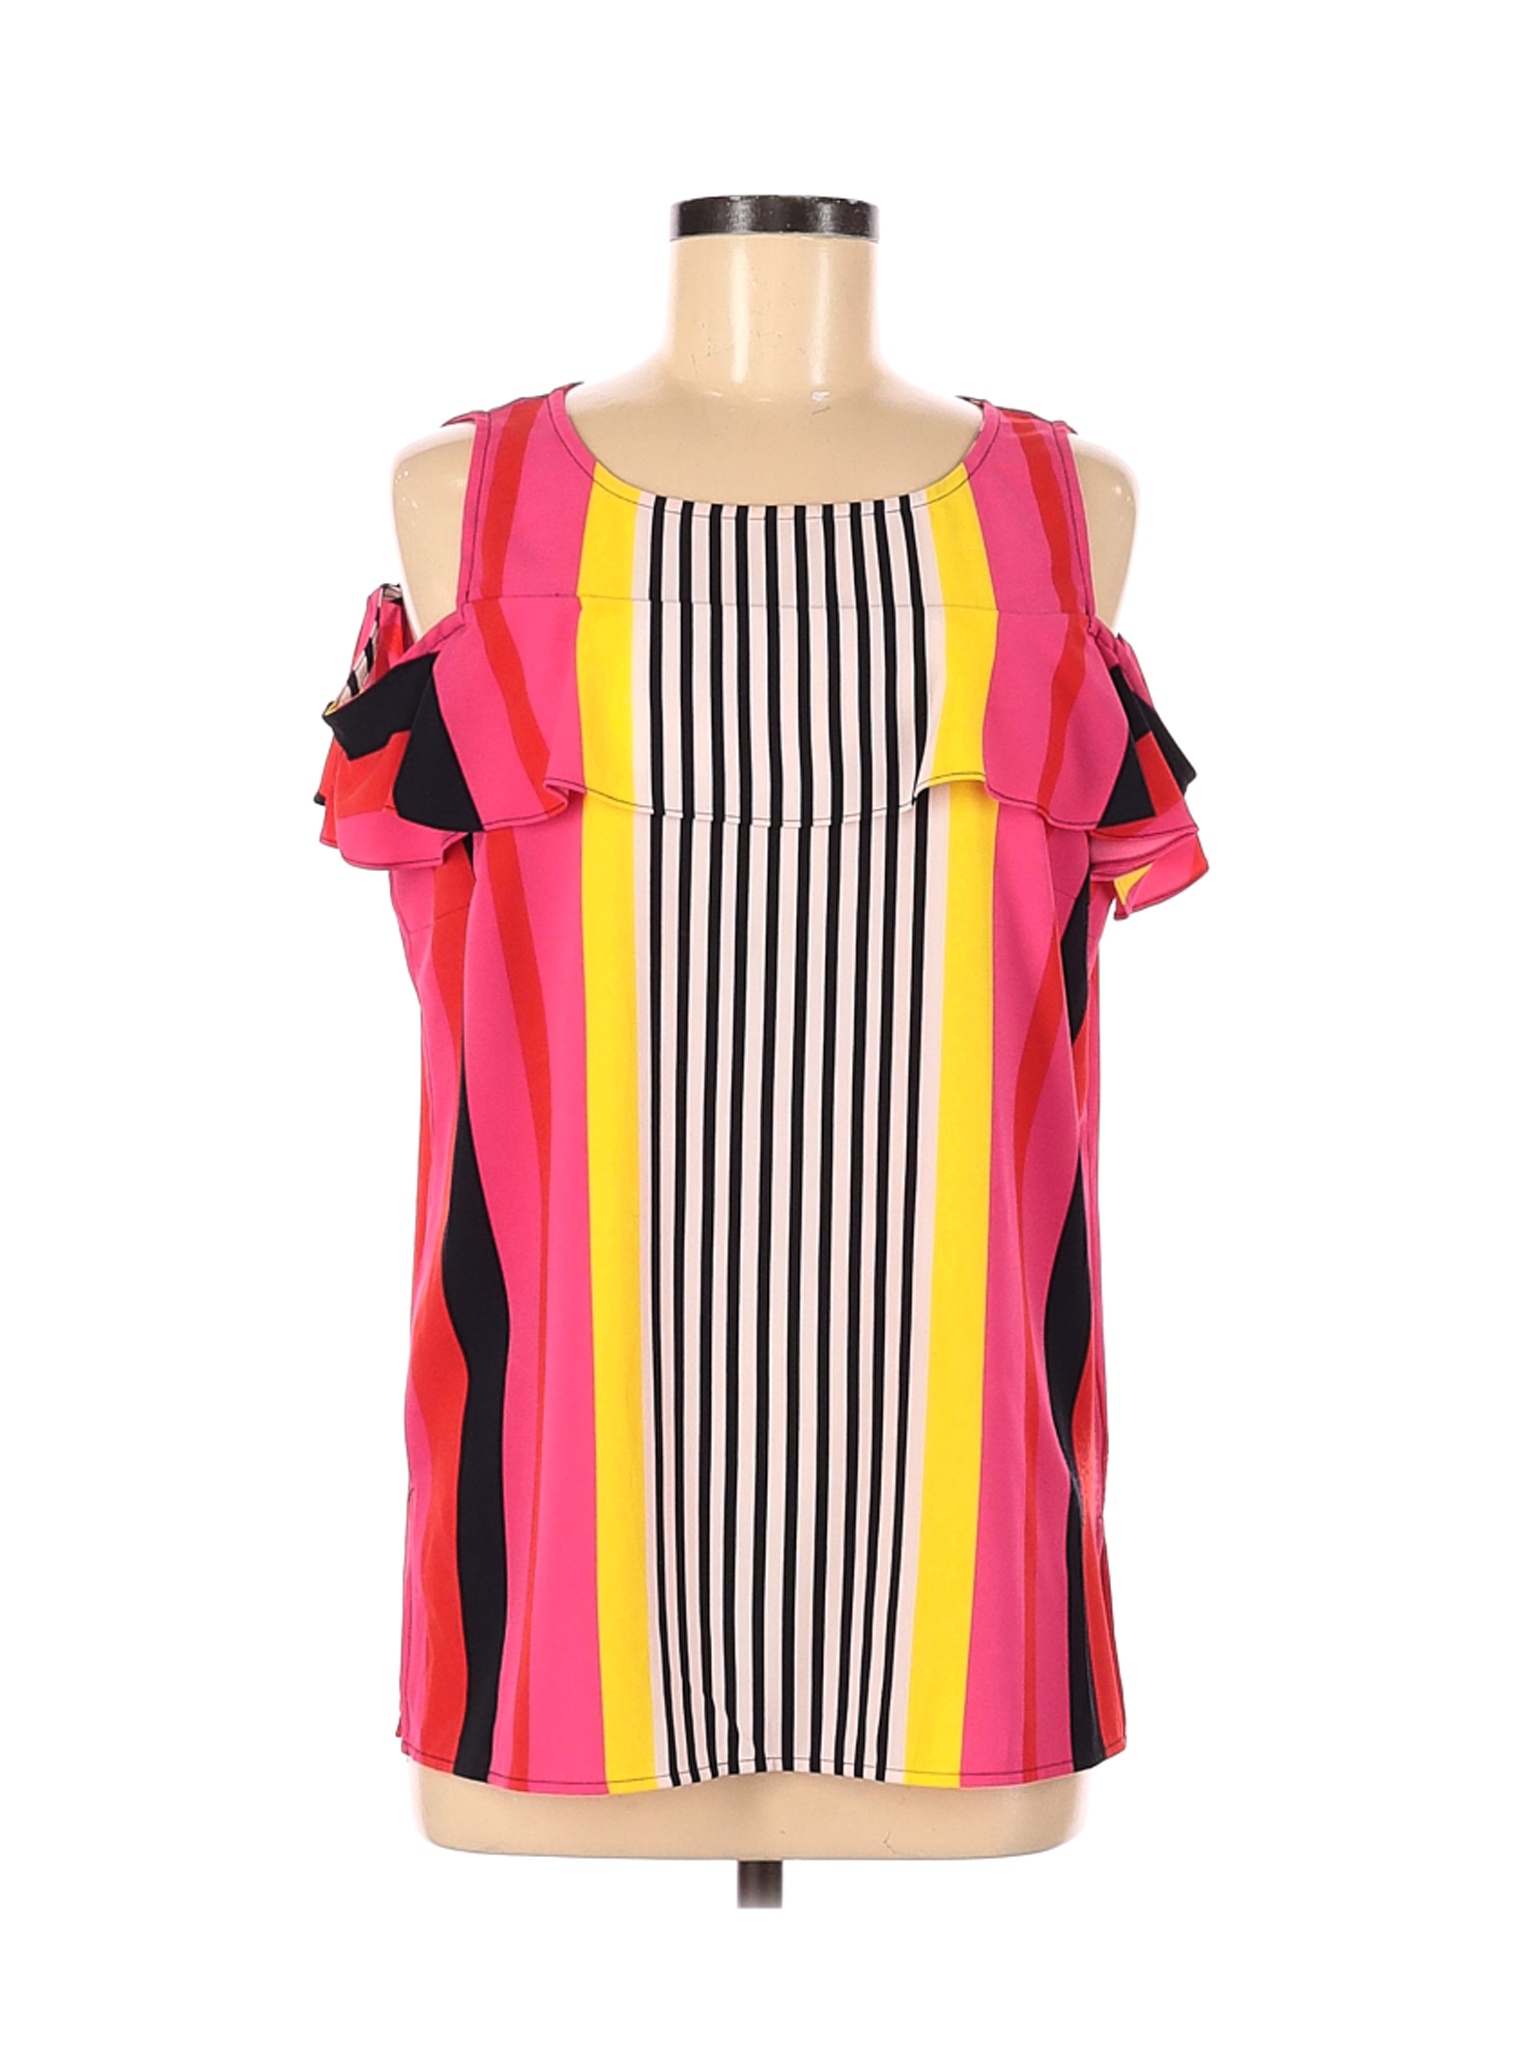 Nygard Women Pink Short Sleeve Blouse M | eBay